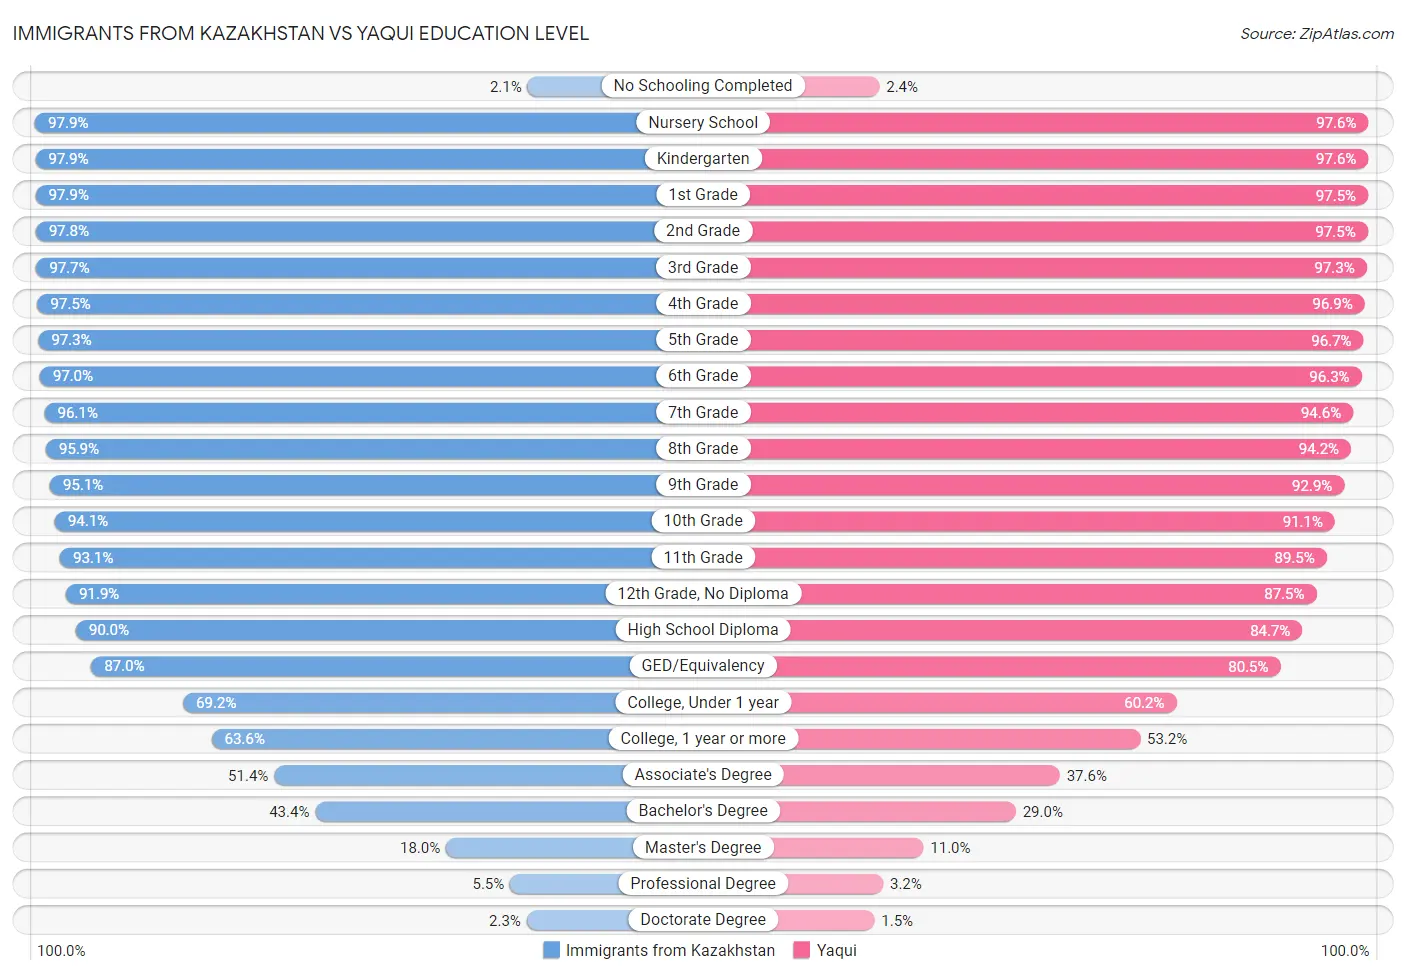 Immigrants from Kazakhstan vs Yaqui Education Level